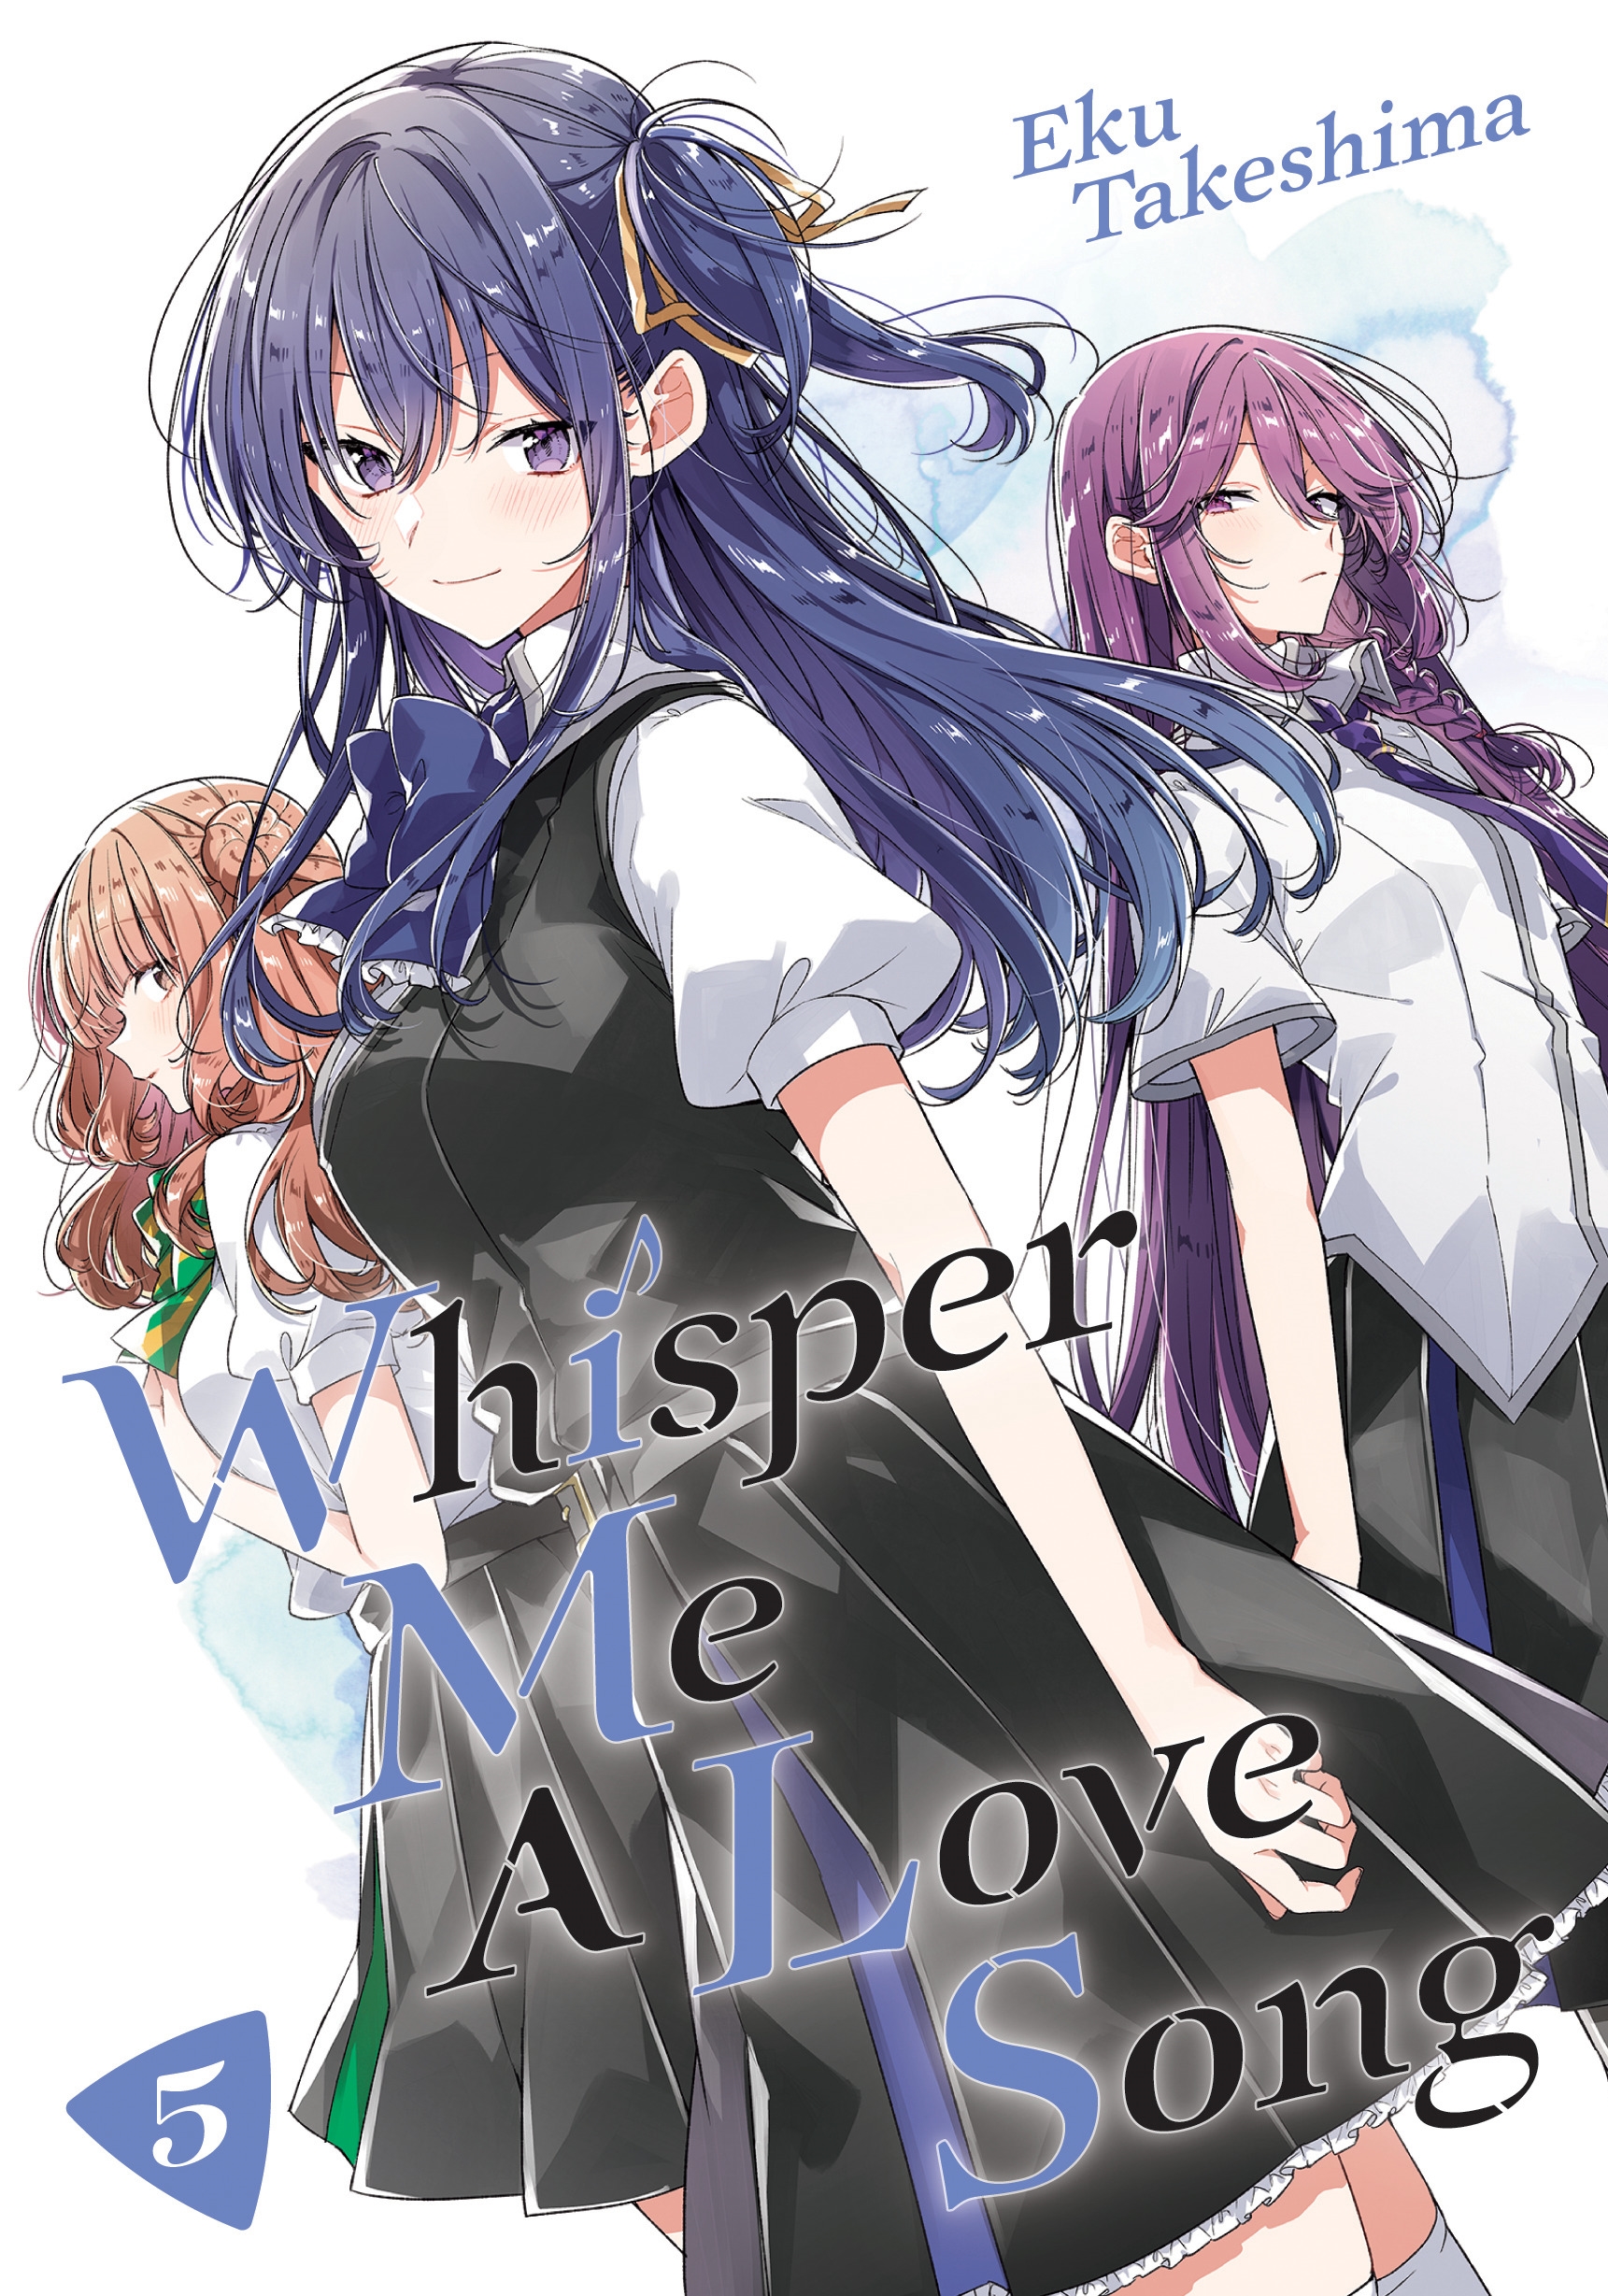 whisper me a love song  Yuri anime, Anime, Love songs